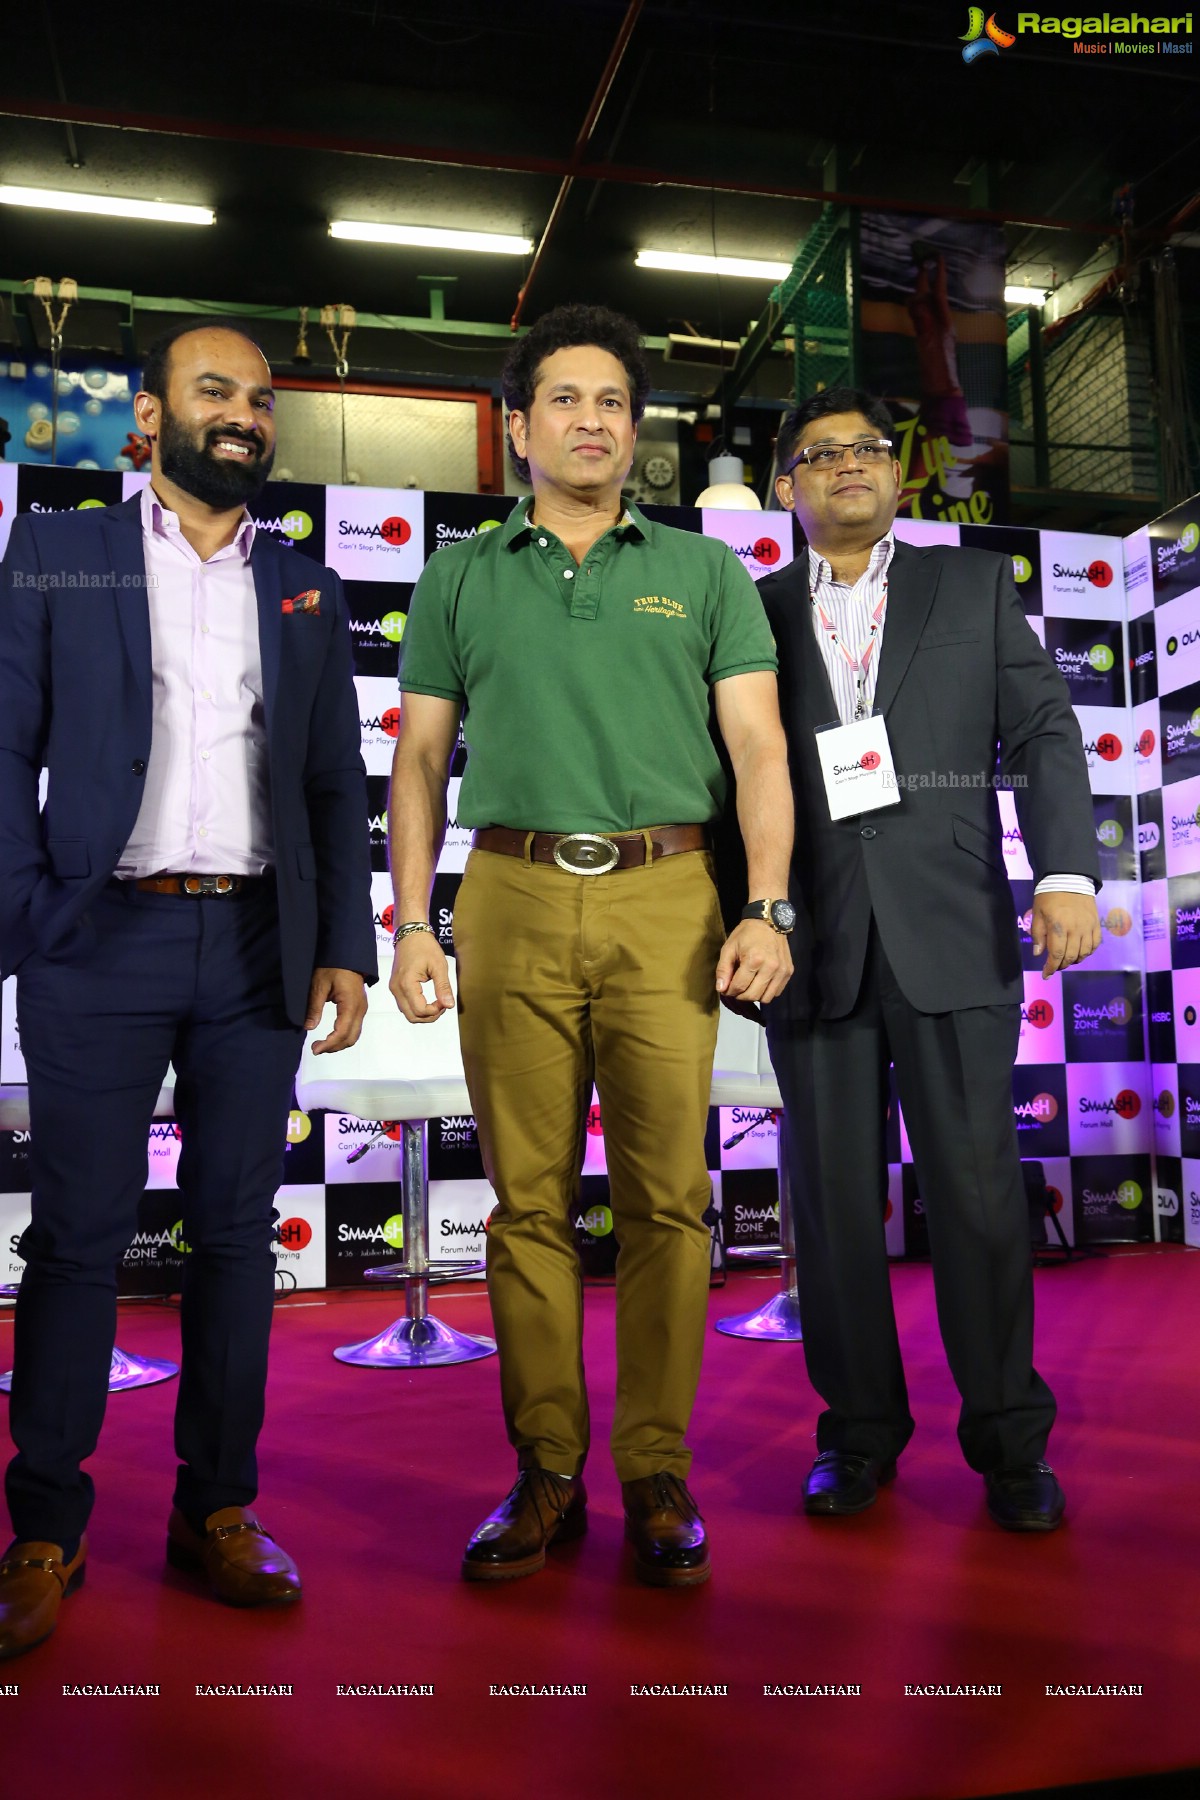 Sachin Tendulkar Announces Winners of National Corporate Bowling Tournament at Smaaash